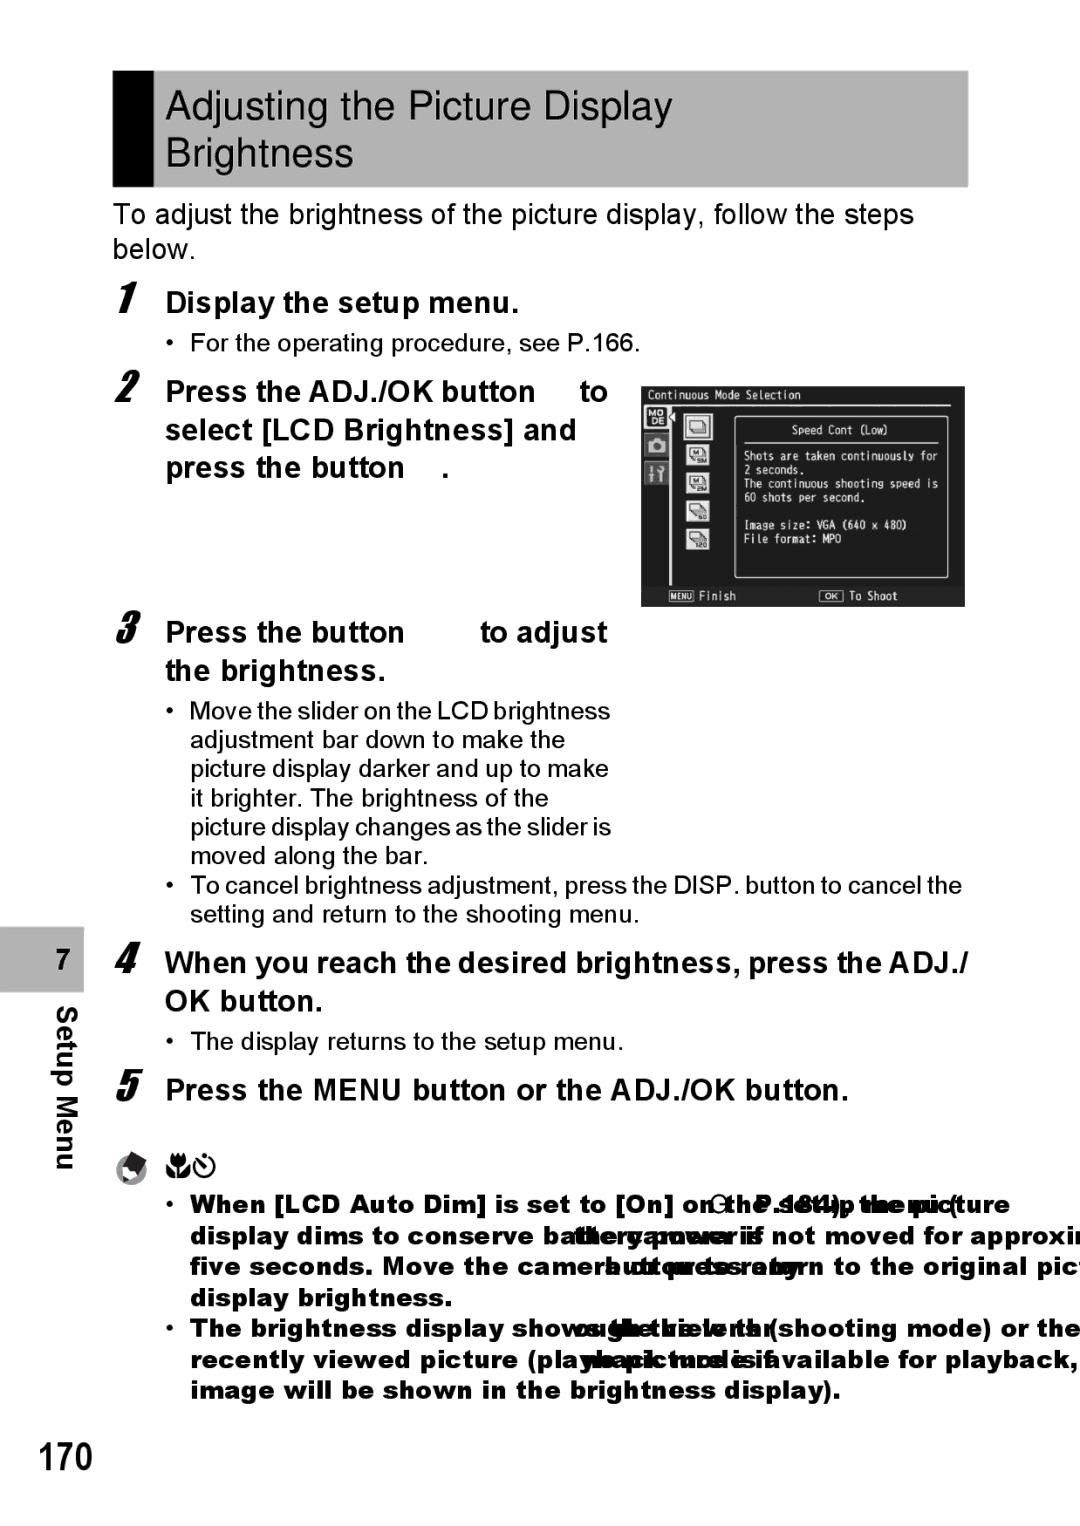 Samsung CX2 manual Adjusting the Picture Display Brightness, 170, Display the setup menu 